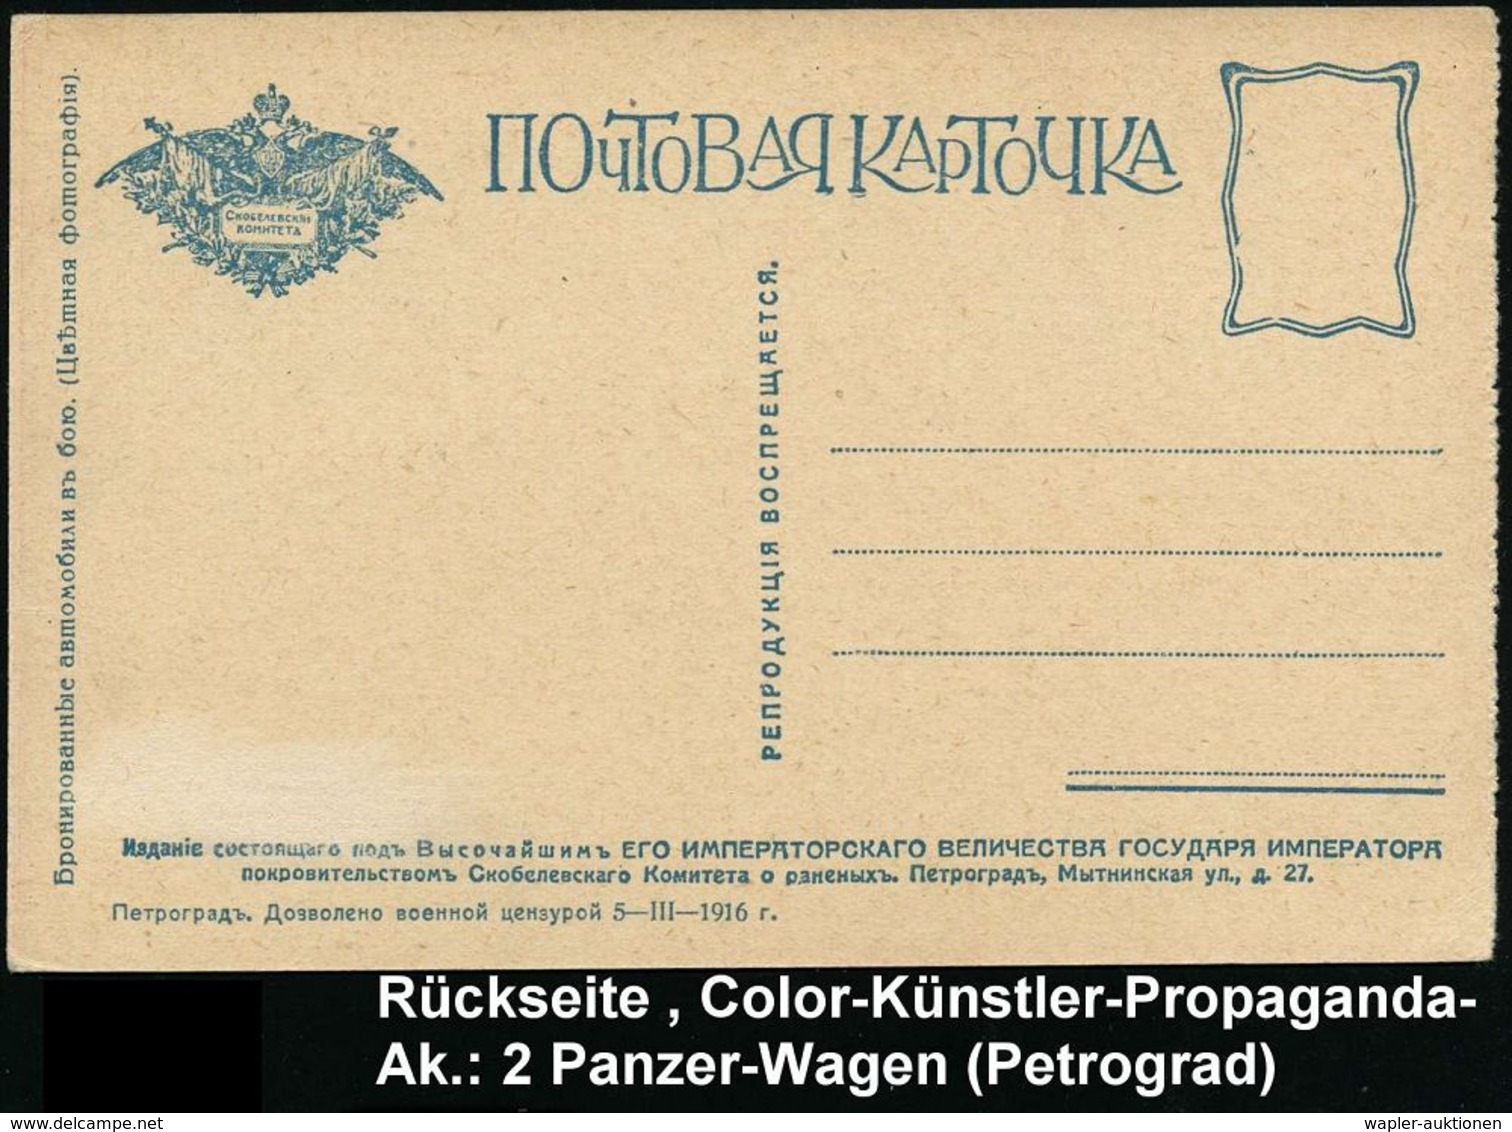 KRAFTFAHR-TRUPPEN / MILITÄR-KFZ. (ohne PANZER) : RUSSLAND 1916 (März) Color-Spenden-Künstler-Ak. (Skobelewski-Komitee):  - Automobili